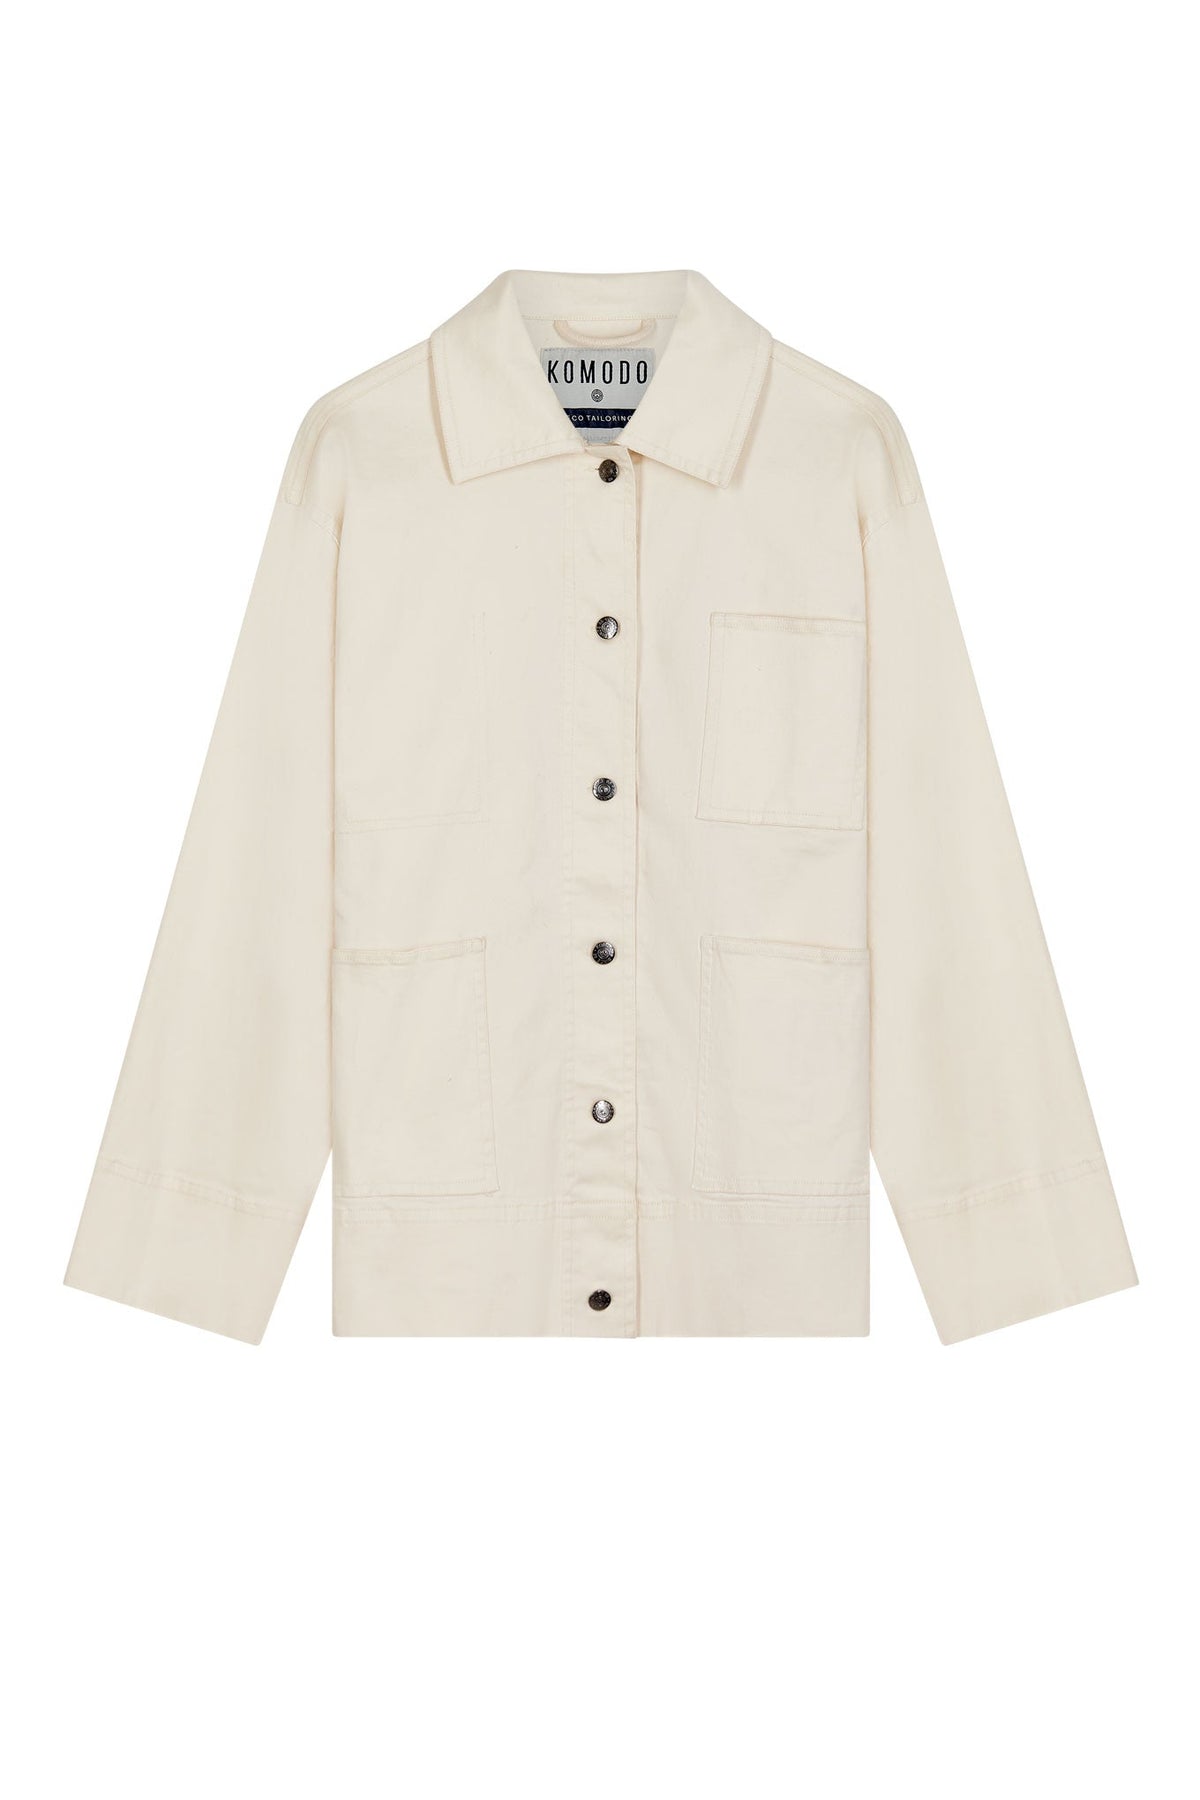 LARRY- Organic Cotton Jacket Off White - Komodo Fashion